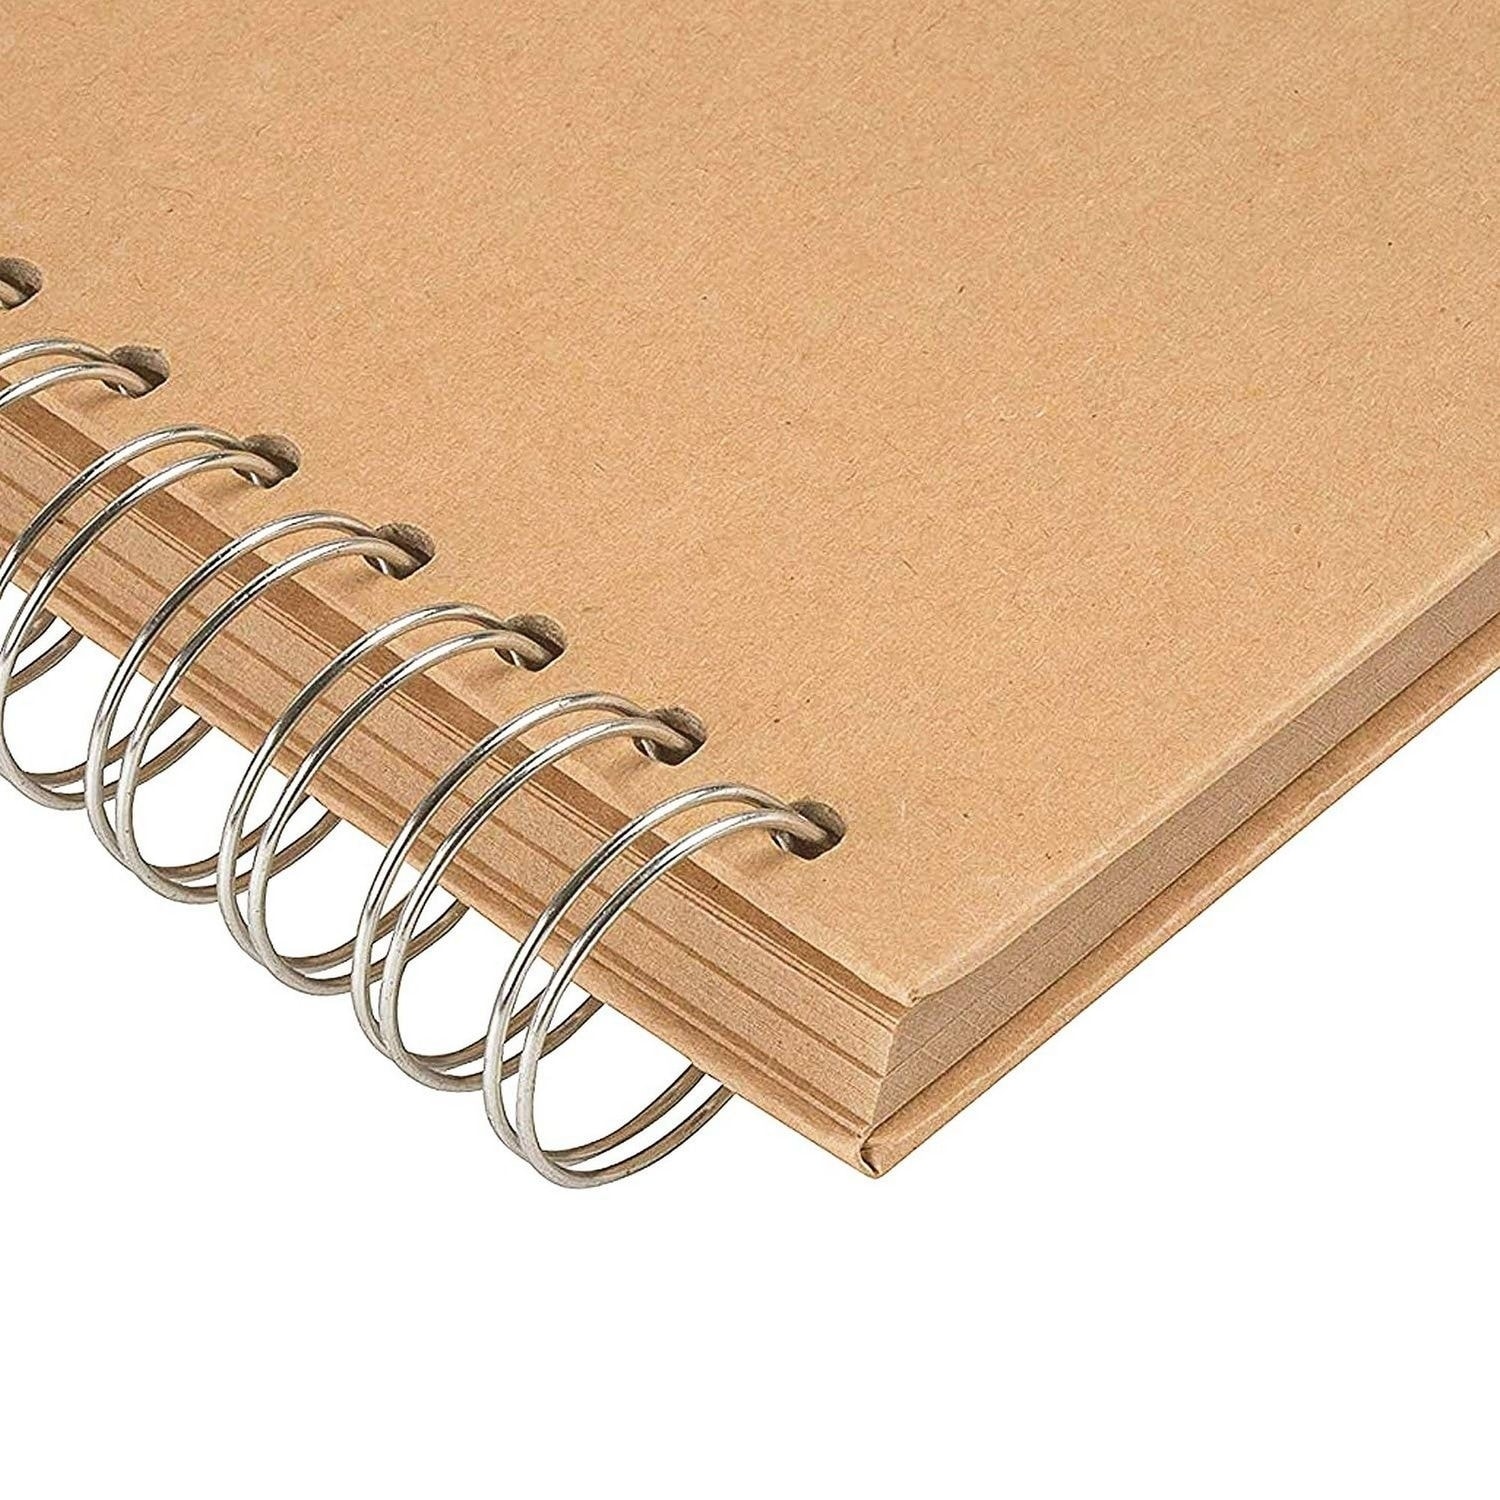 Blank Scrapbook-long Chipboard Album-bare Book-6 or More Page Long Bare  Chipboard Album-8 3/8 X 4 1/4 